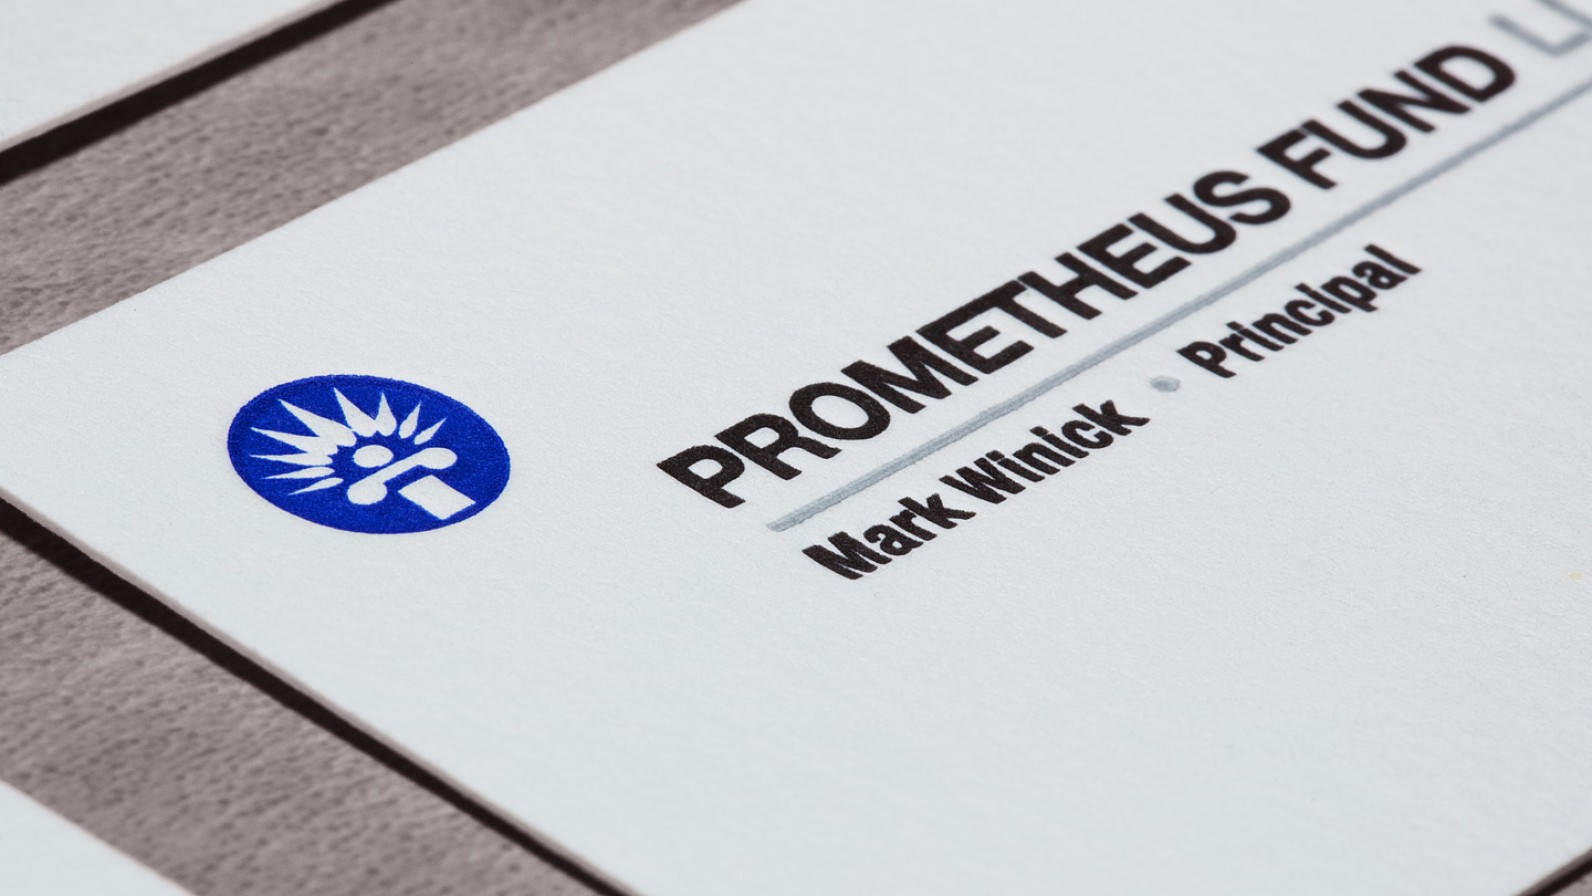 a prometheus fund llc letterpress business card close-up